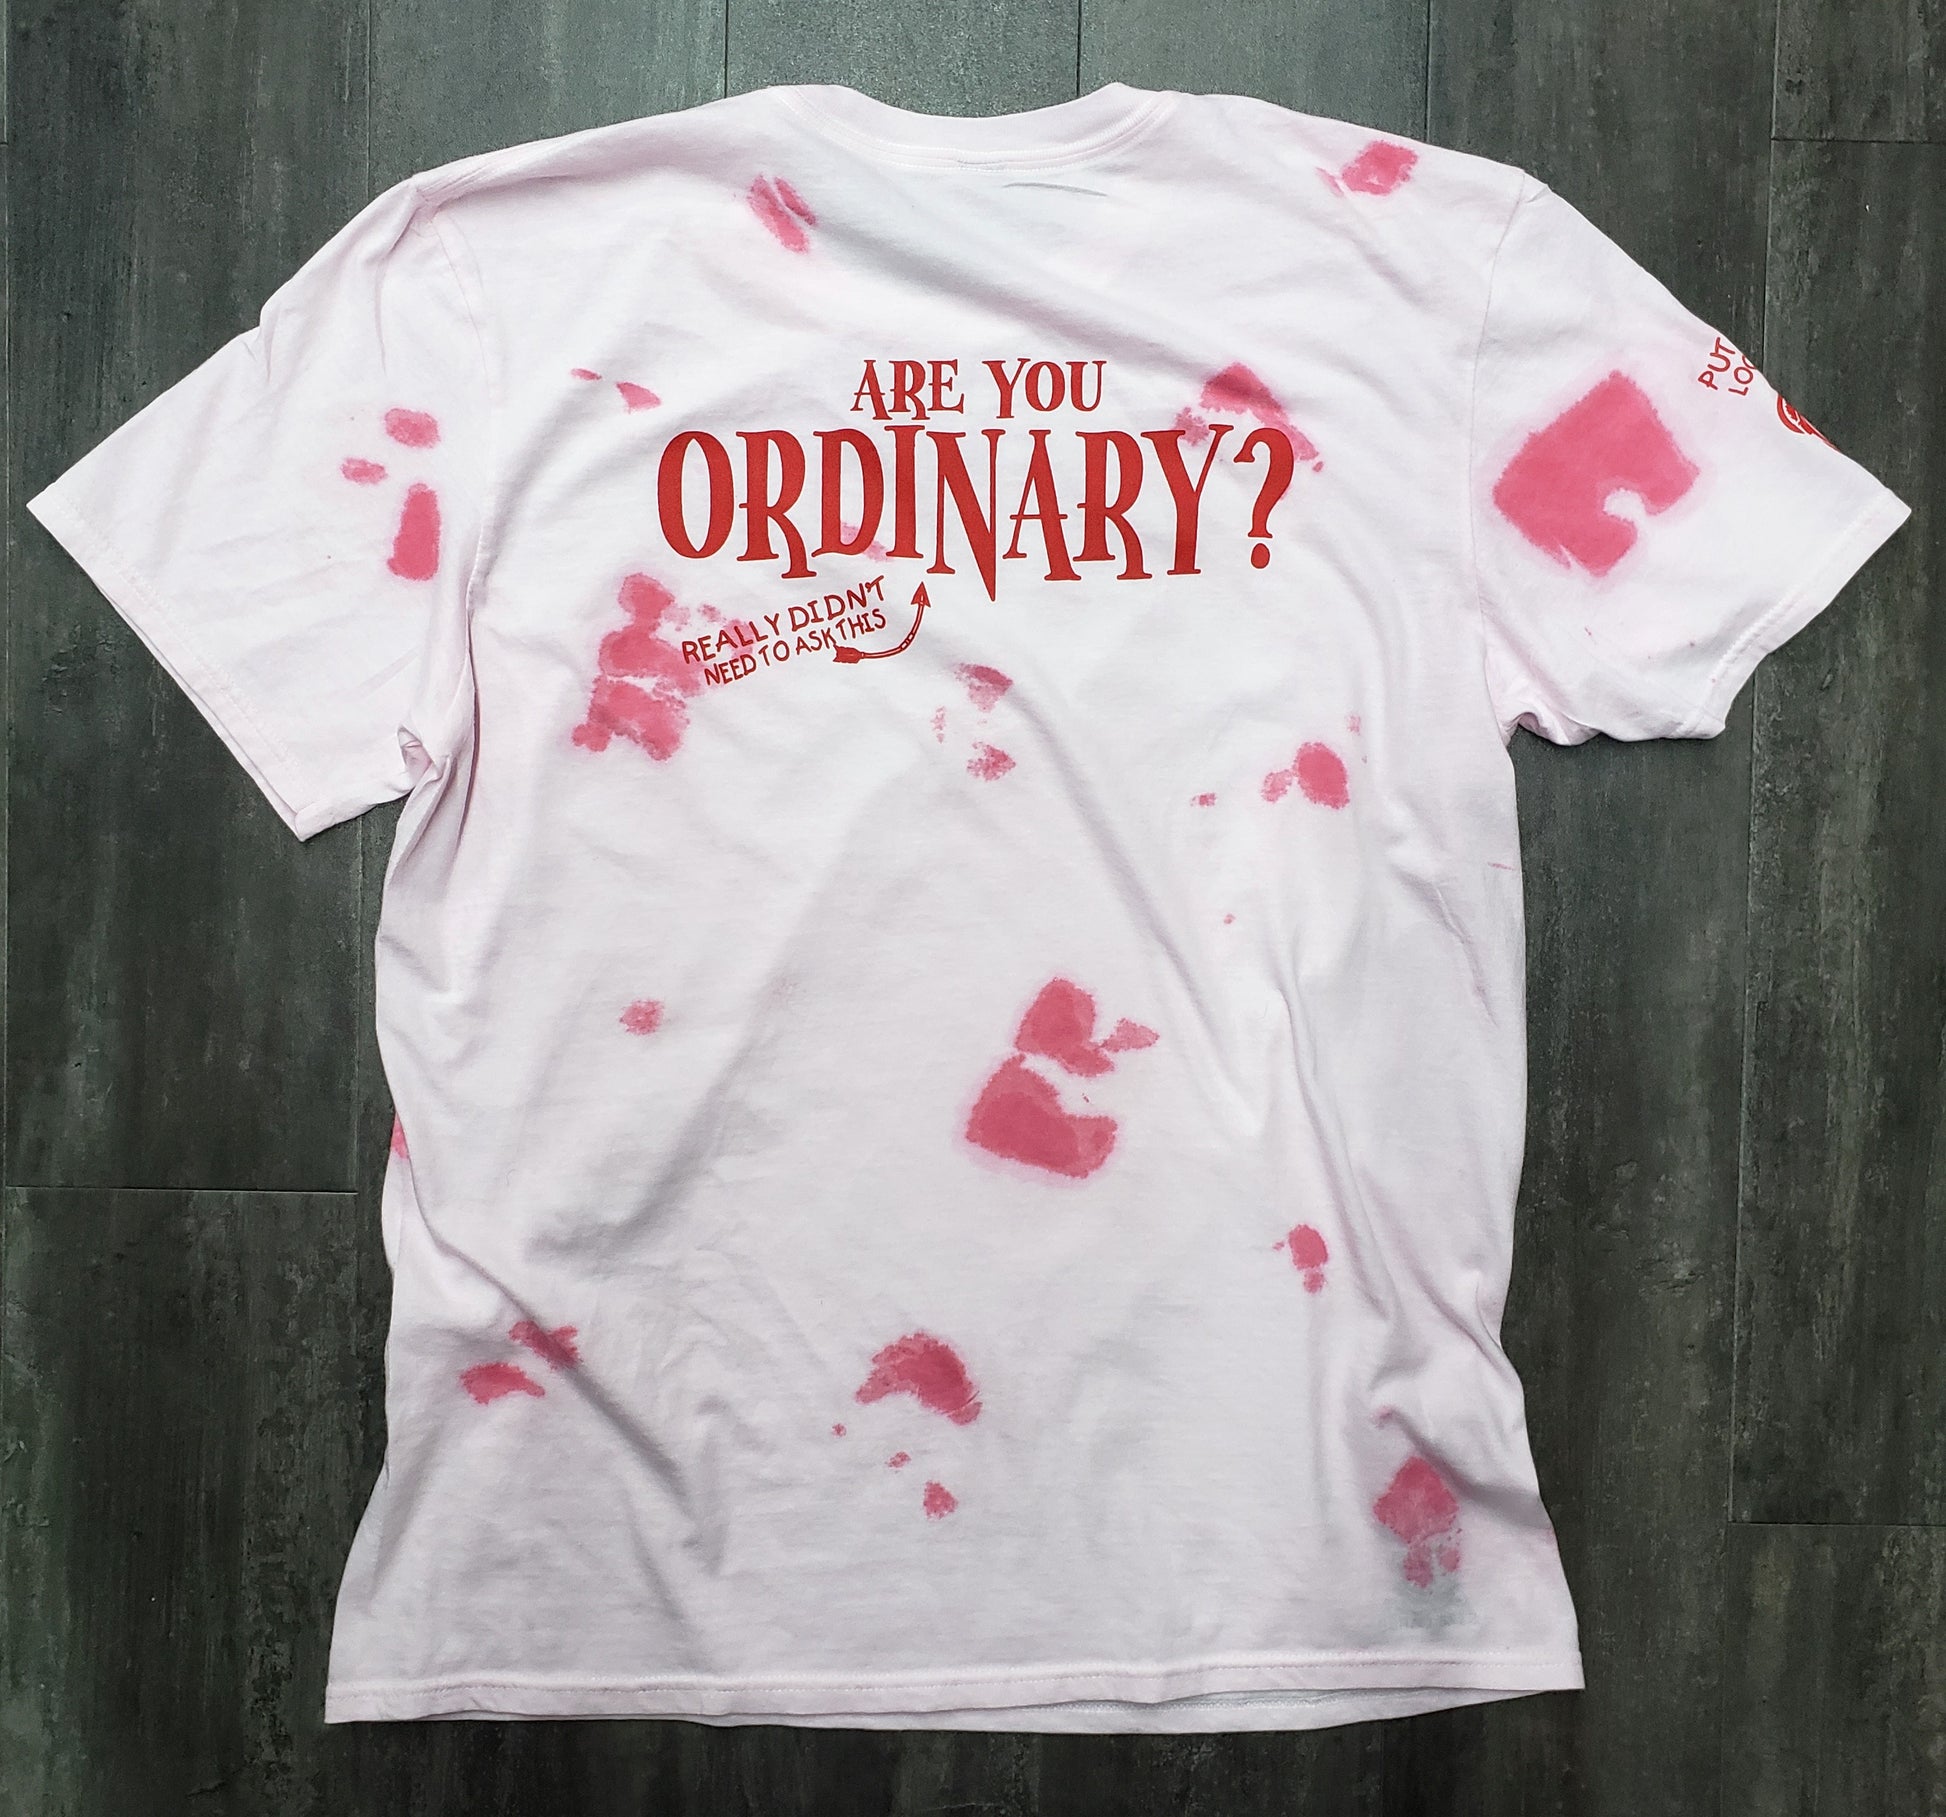 Barely "No Ordinary Shirt" - Barely Ordinary